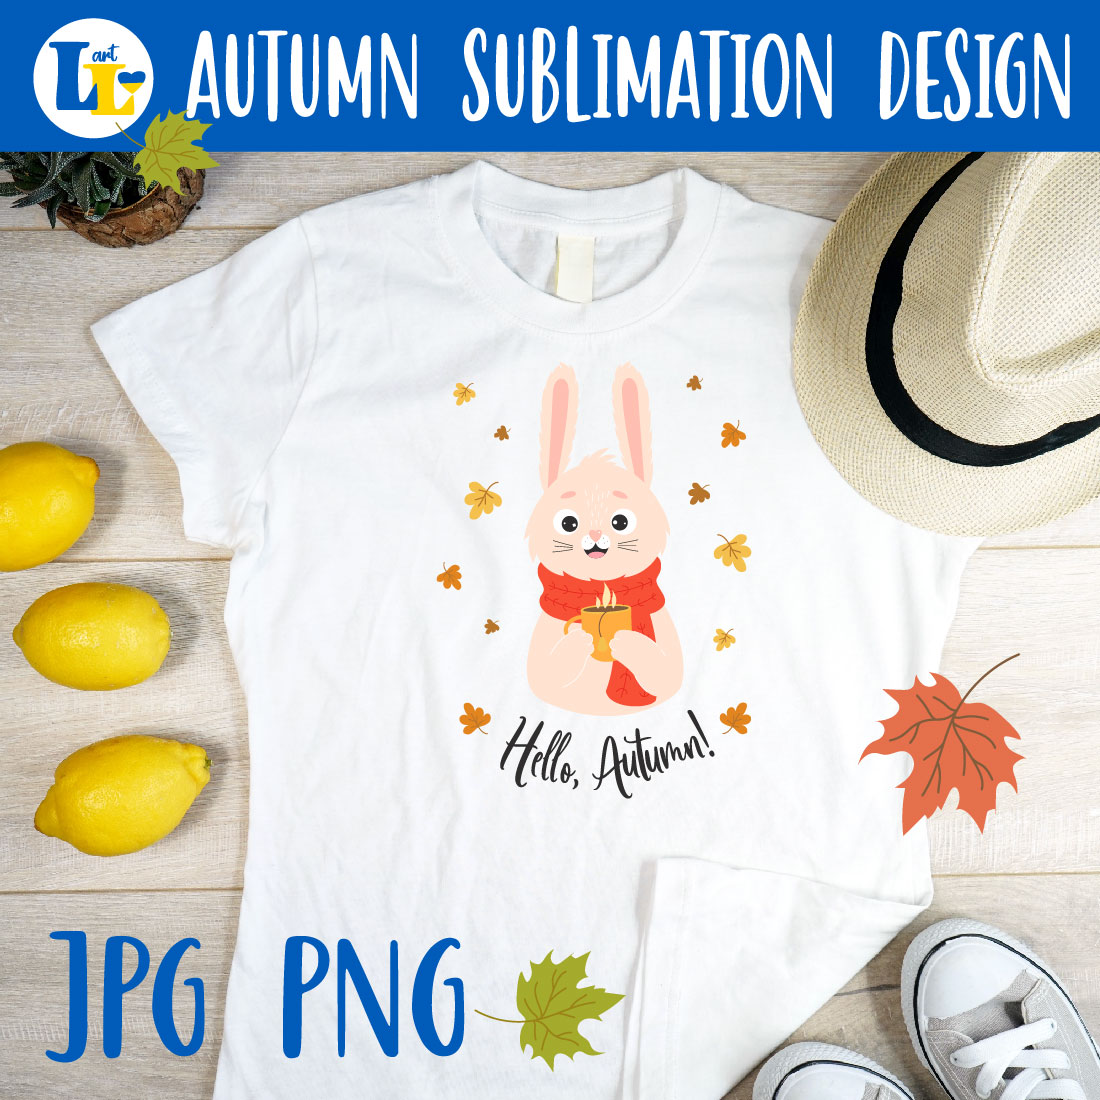 Autumn Cute Bunny Animal Sublimation Design cover image.